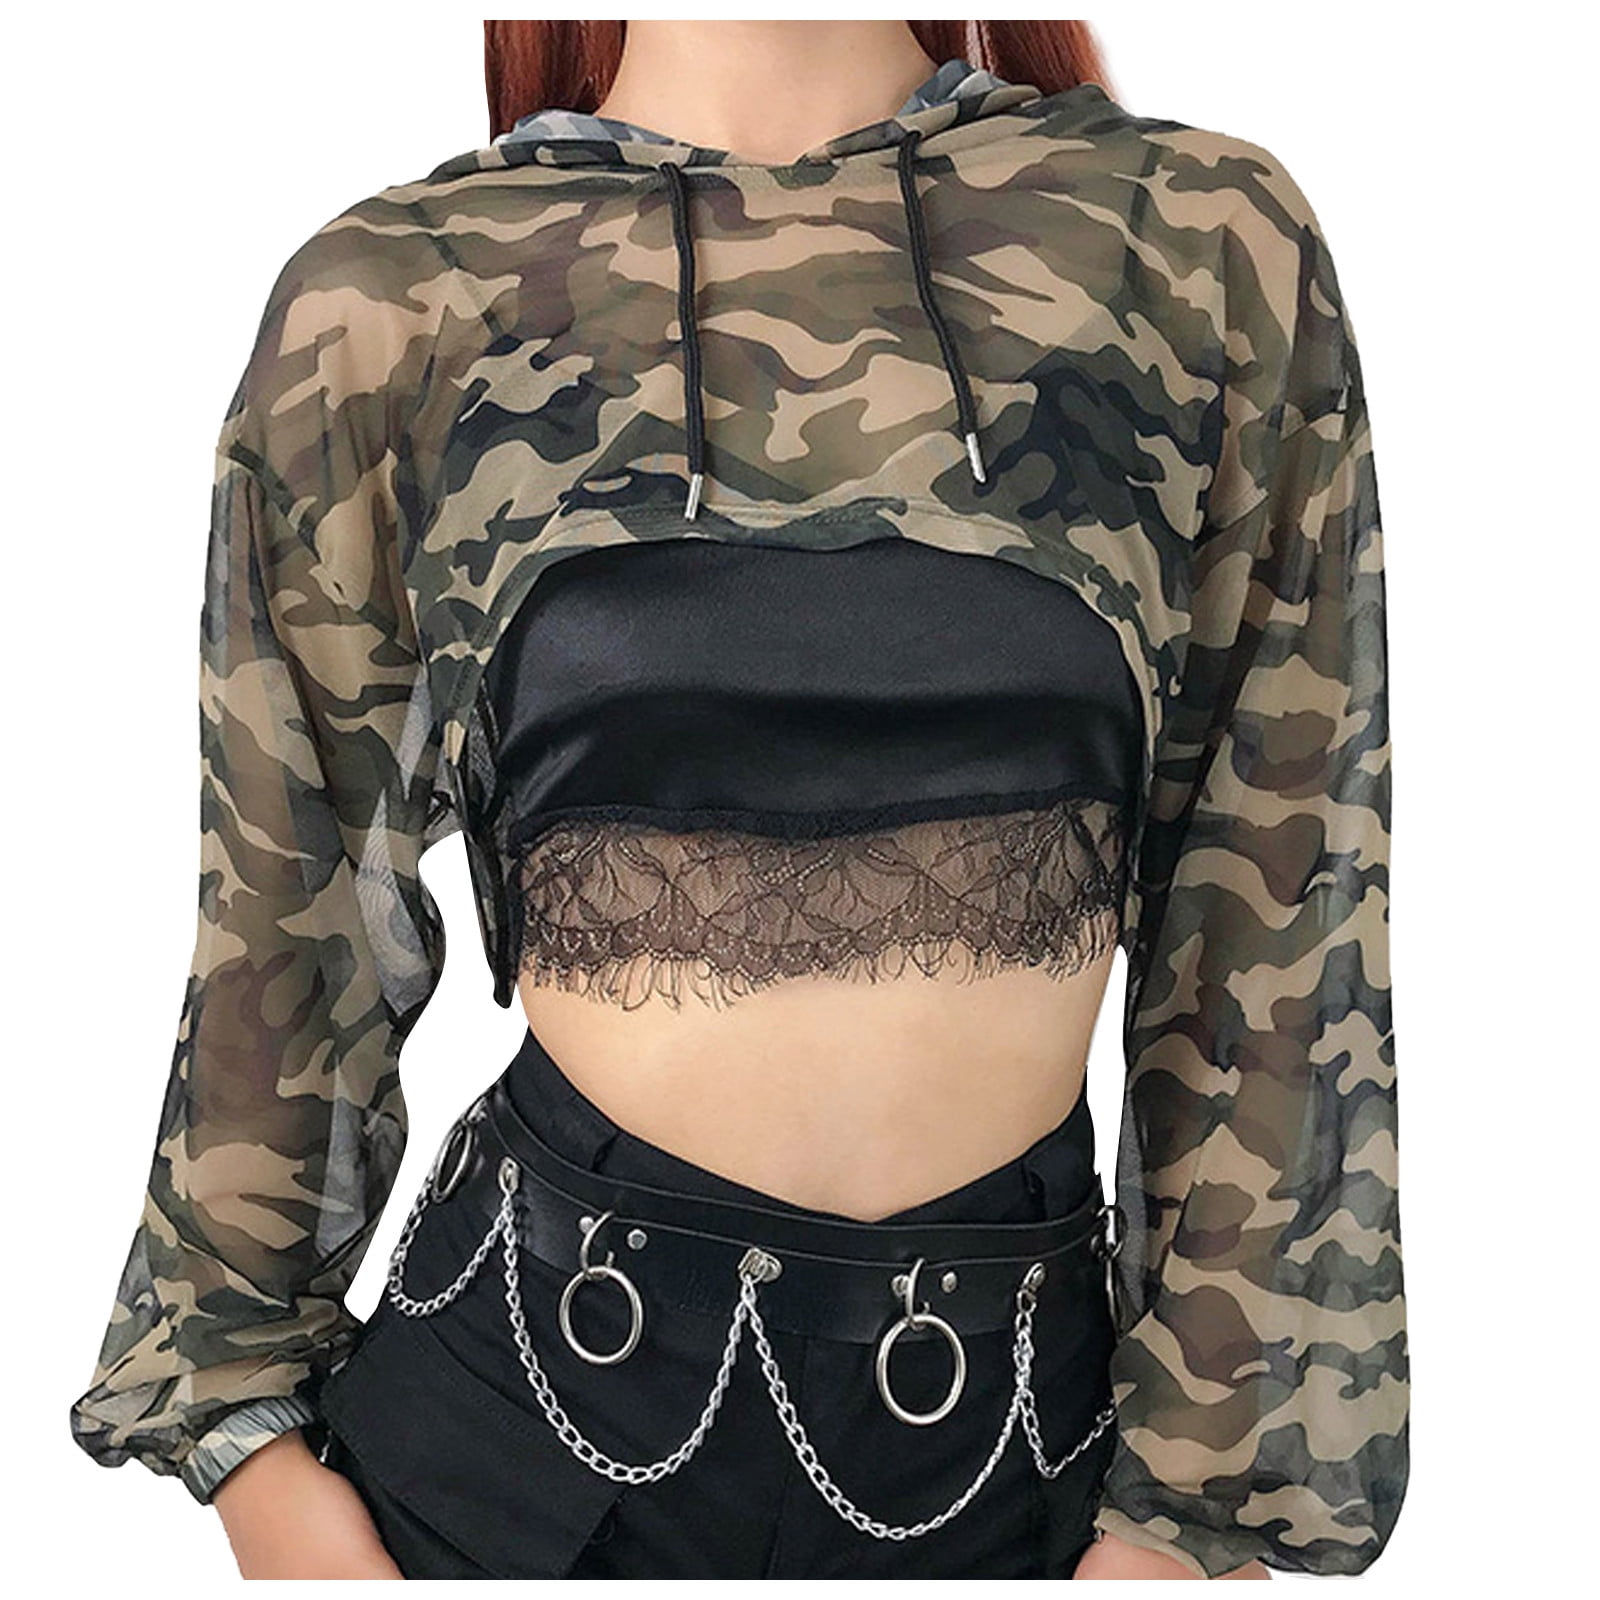 Women Teen Girls Camouflage Zip up Long Sleeve Workout Cropped Crop Top Hoodie Sweatshirt Jacket Casual Tops Blouse Shirt 